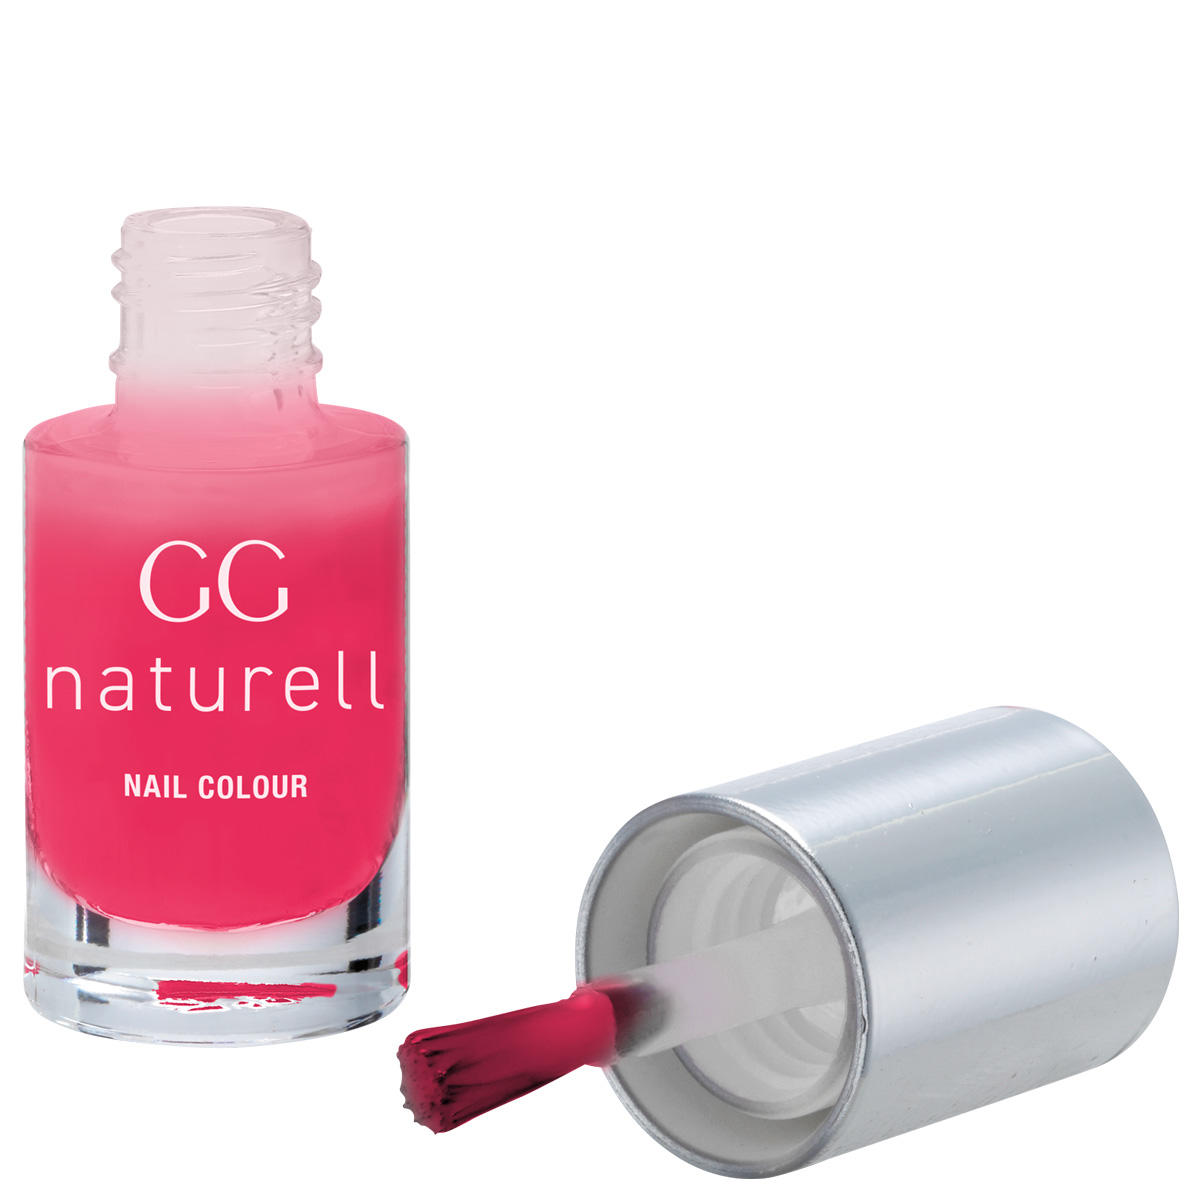 GERTRAUD GRUBER GG naturell Nail Colour   - 1